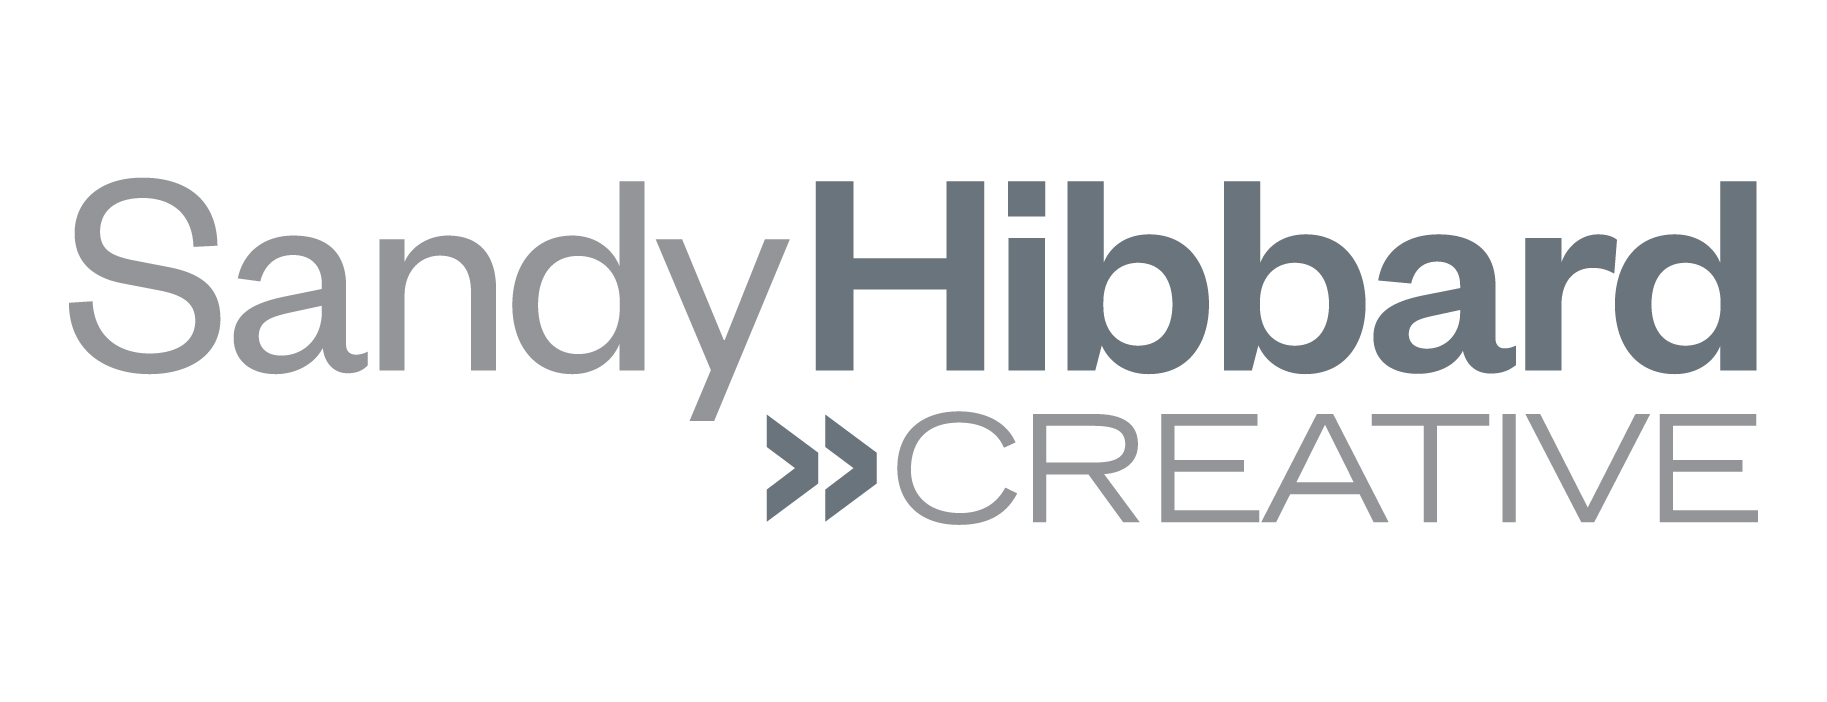 52 Killer Marketing Tips with Sandy Hibbard: Create Your HUB!